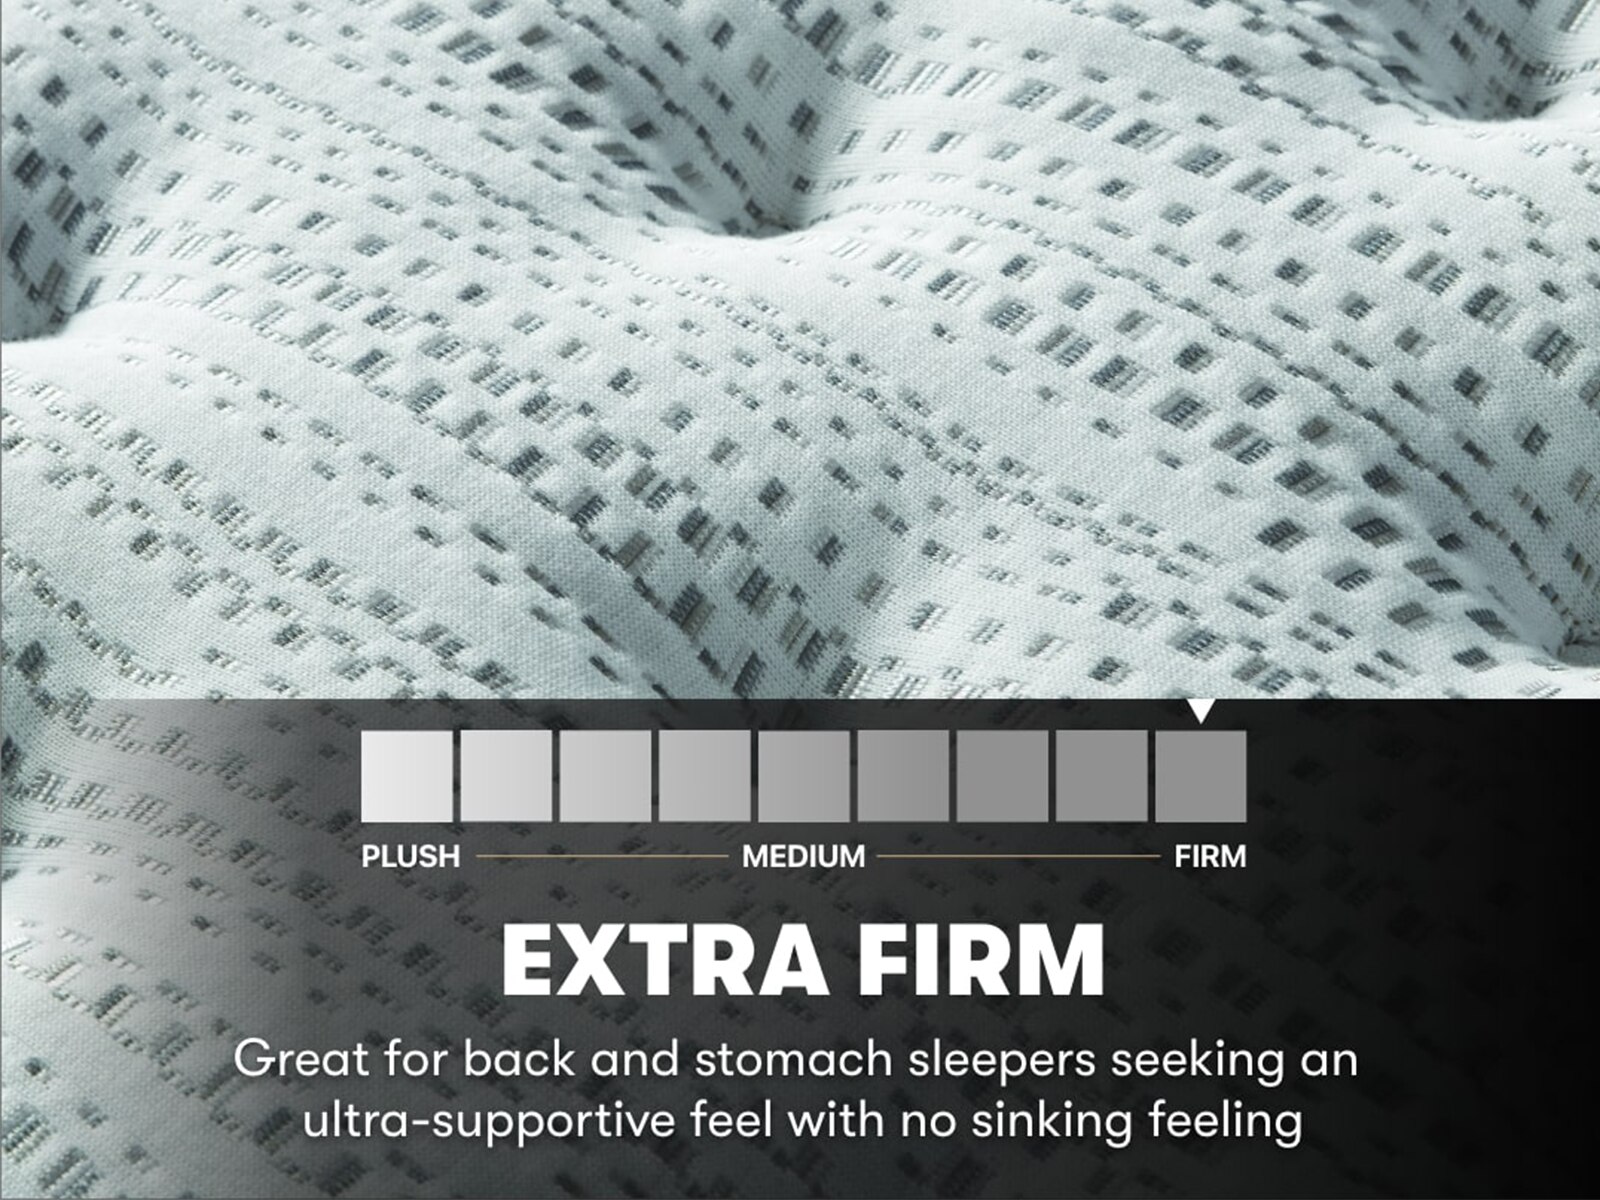 silver brs900 11.75 extra firm mattress review